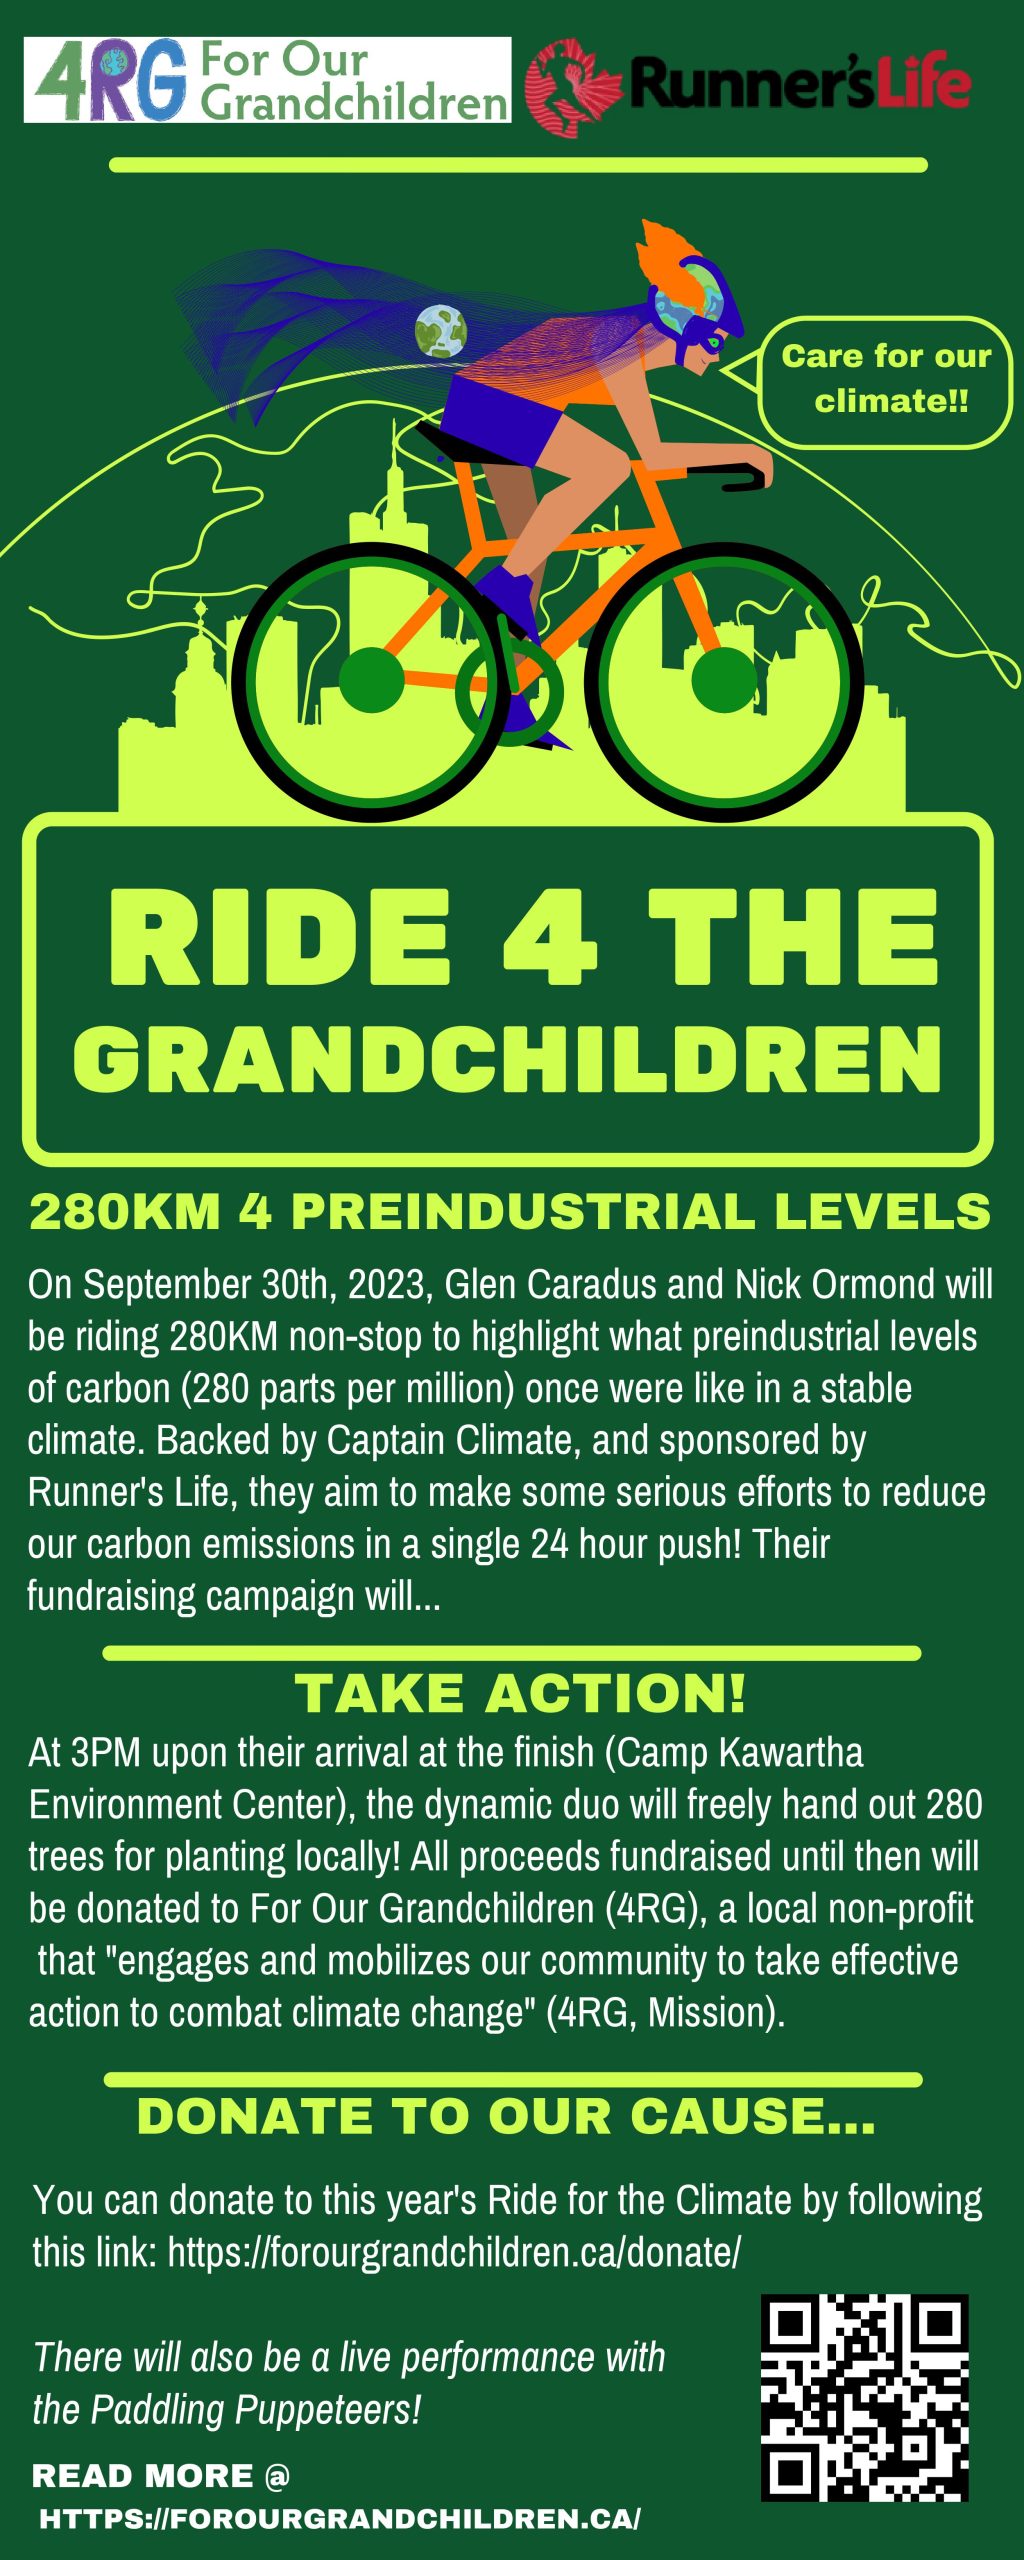 Ride 4 The Grandchildren information poster